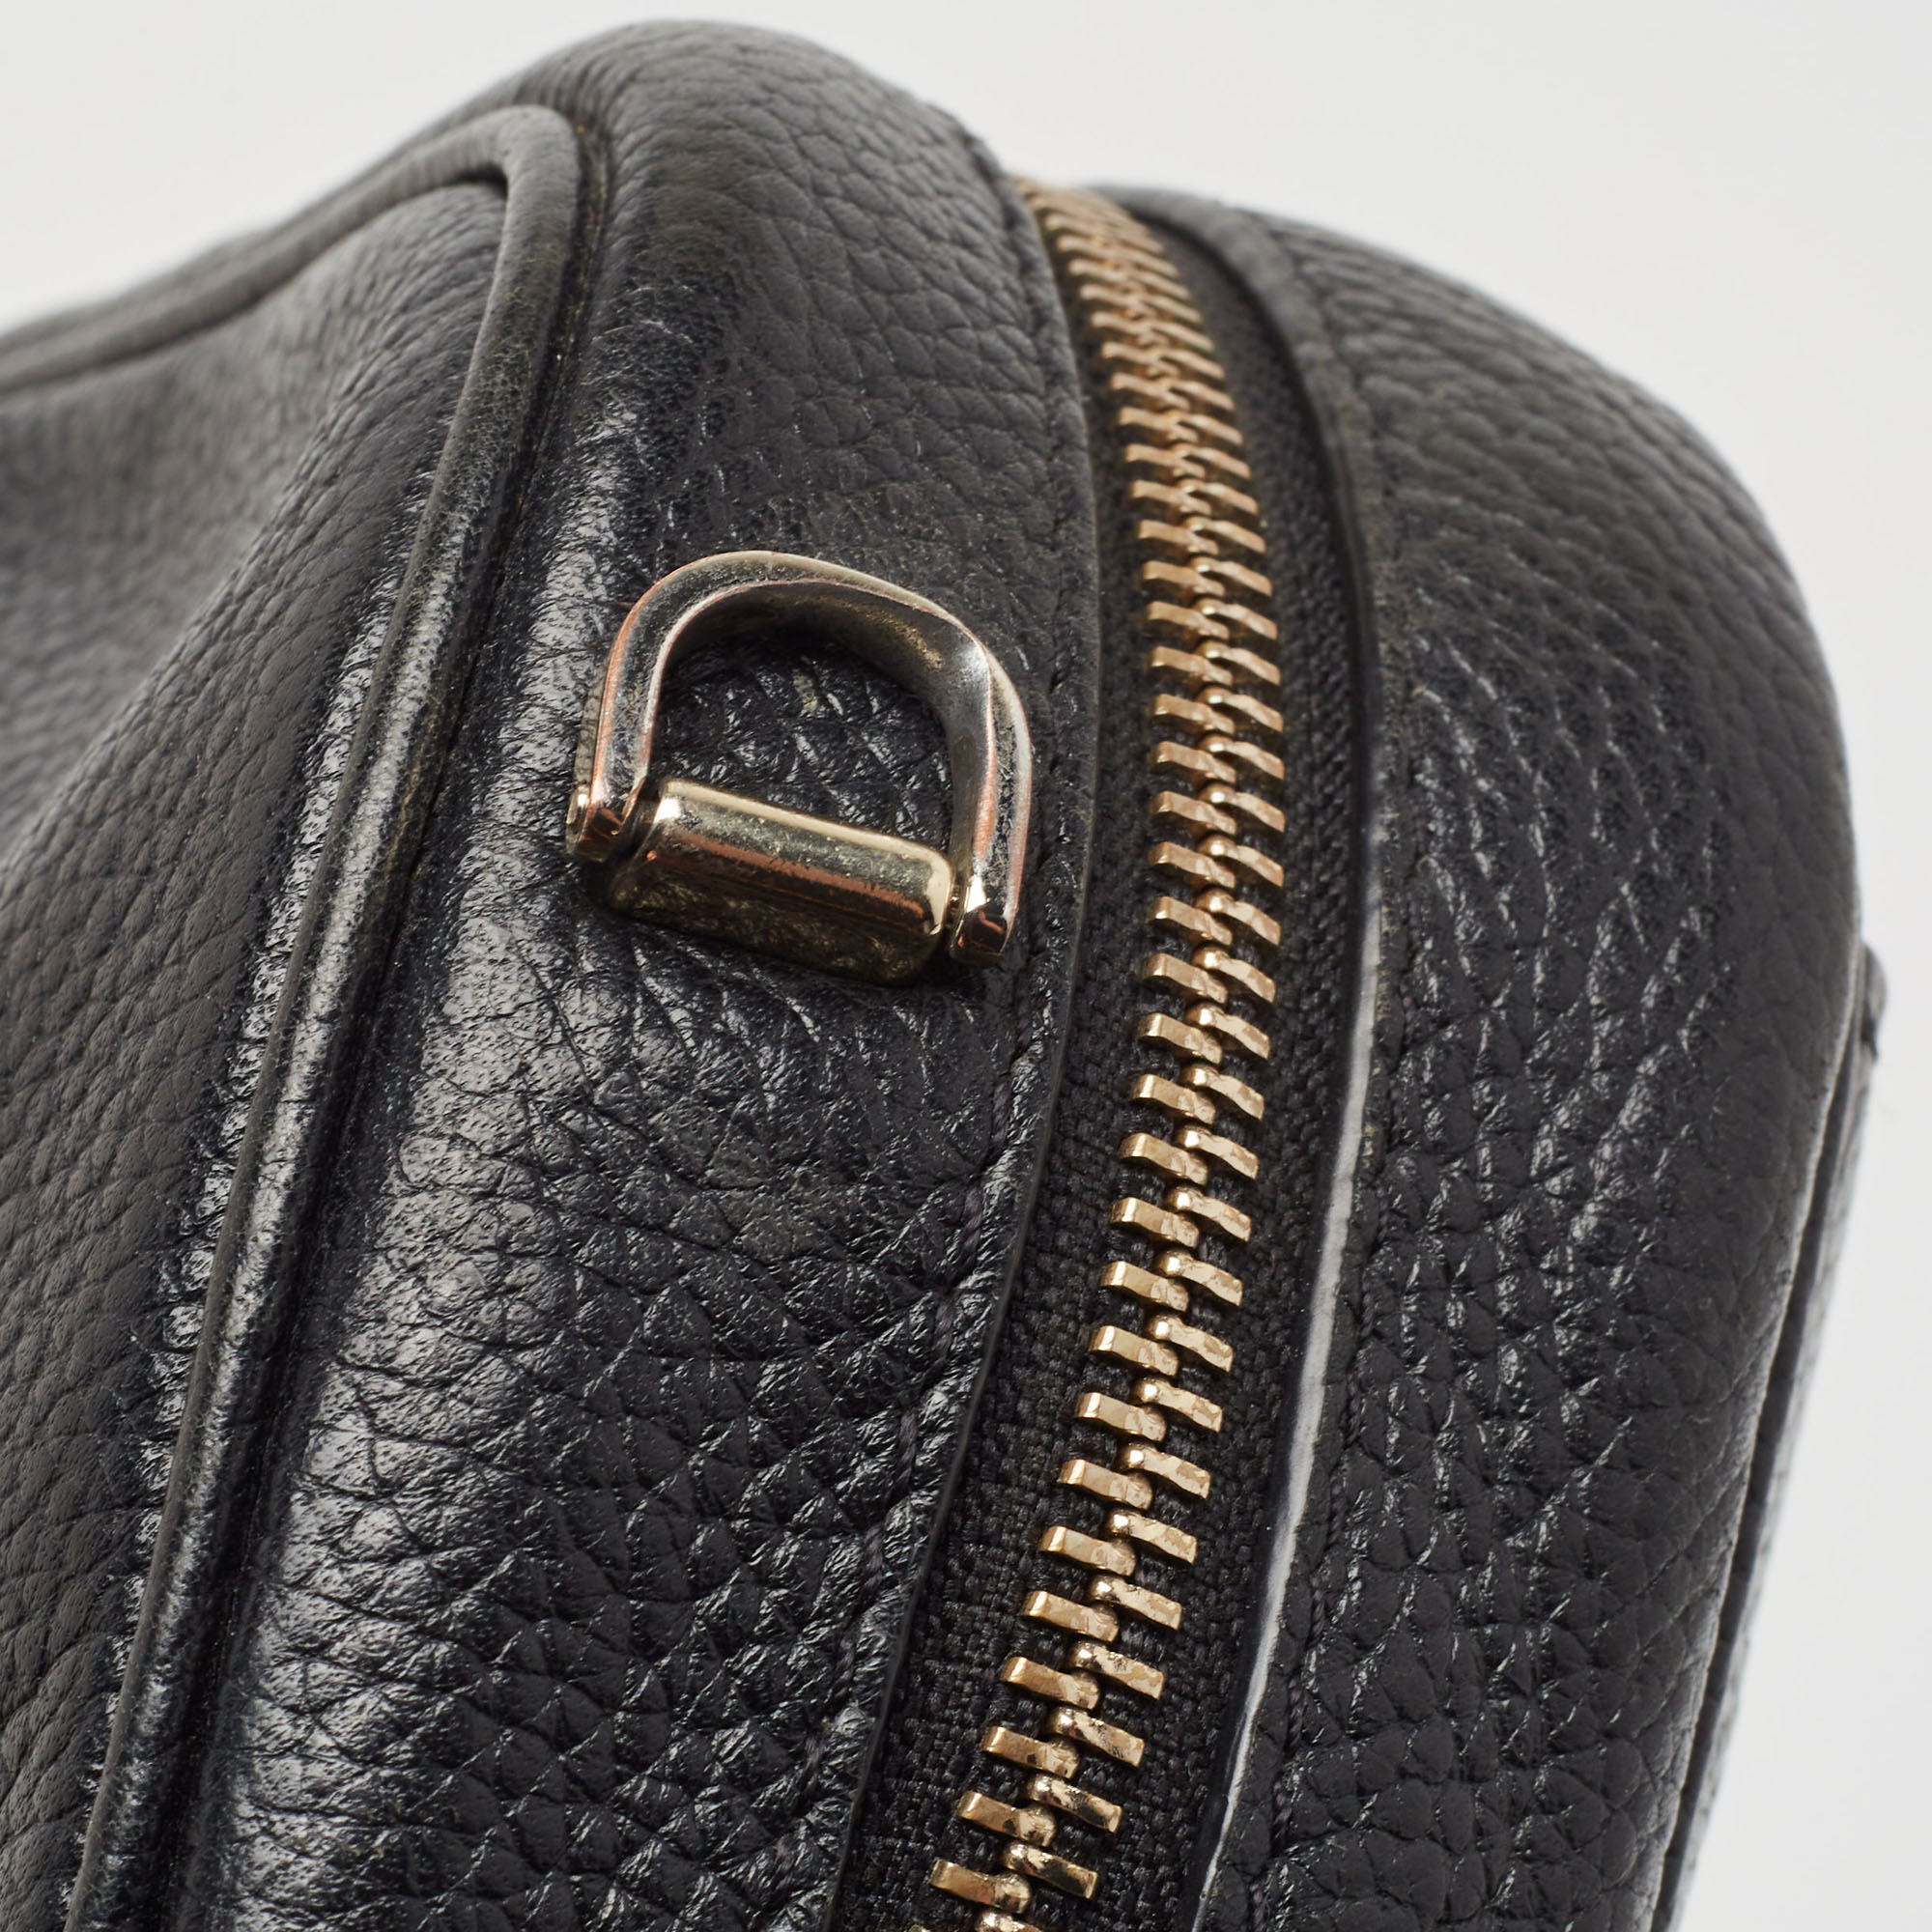 Kate Spade Black Leather Camera Crossbody Bag